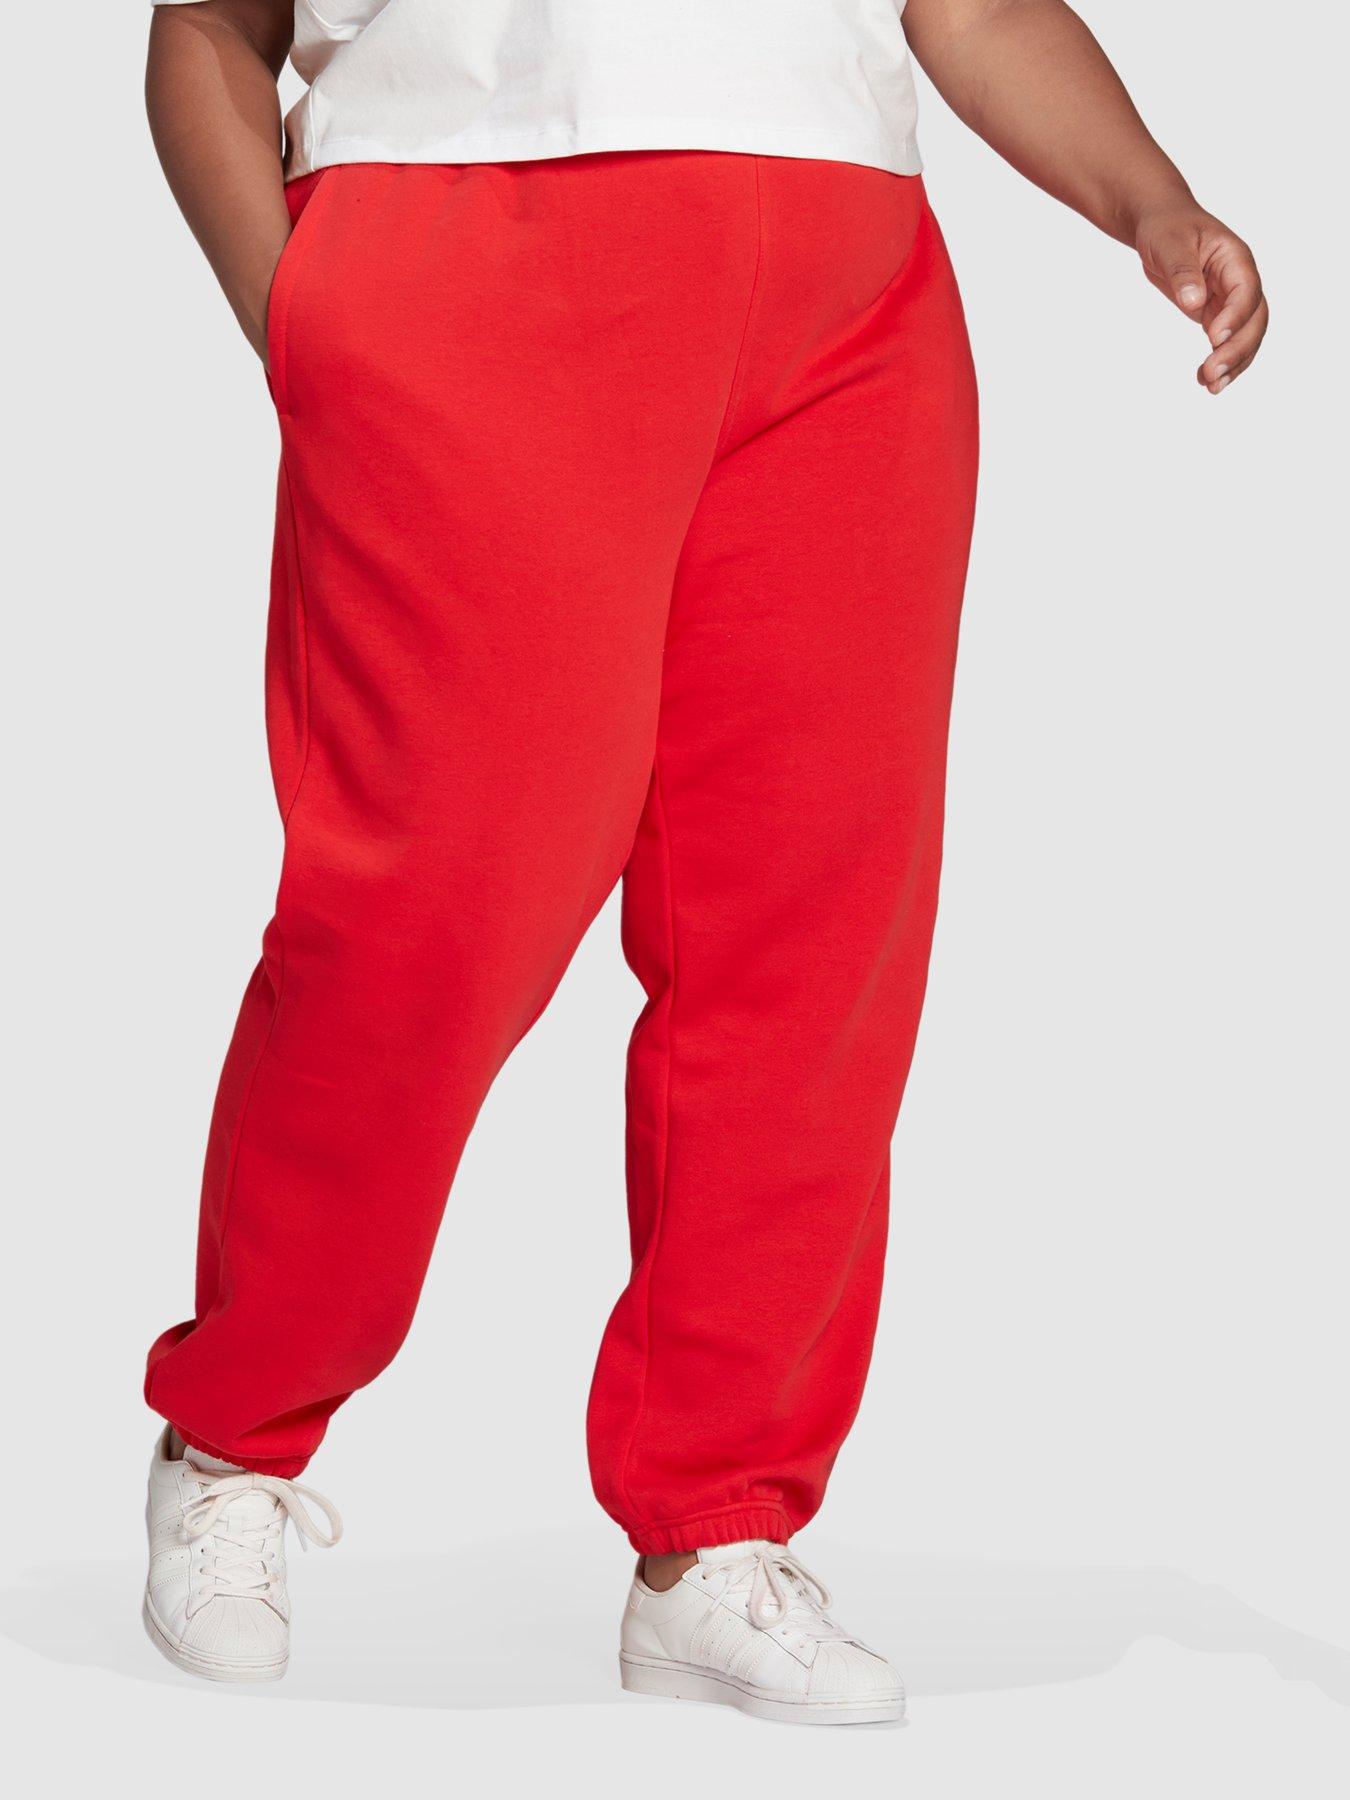 Trousers & Leggings Pants (Plus Size) - Red